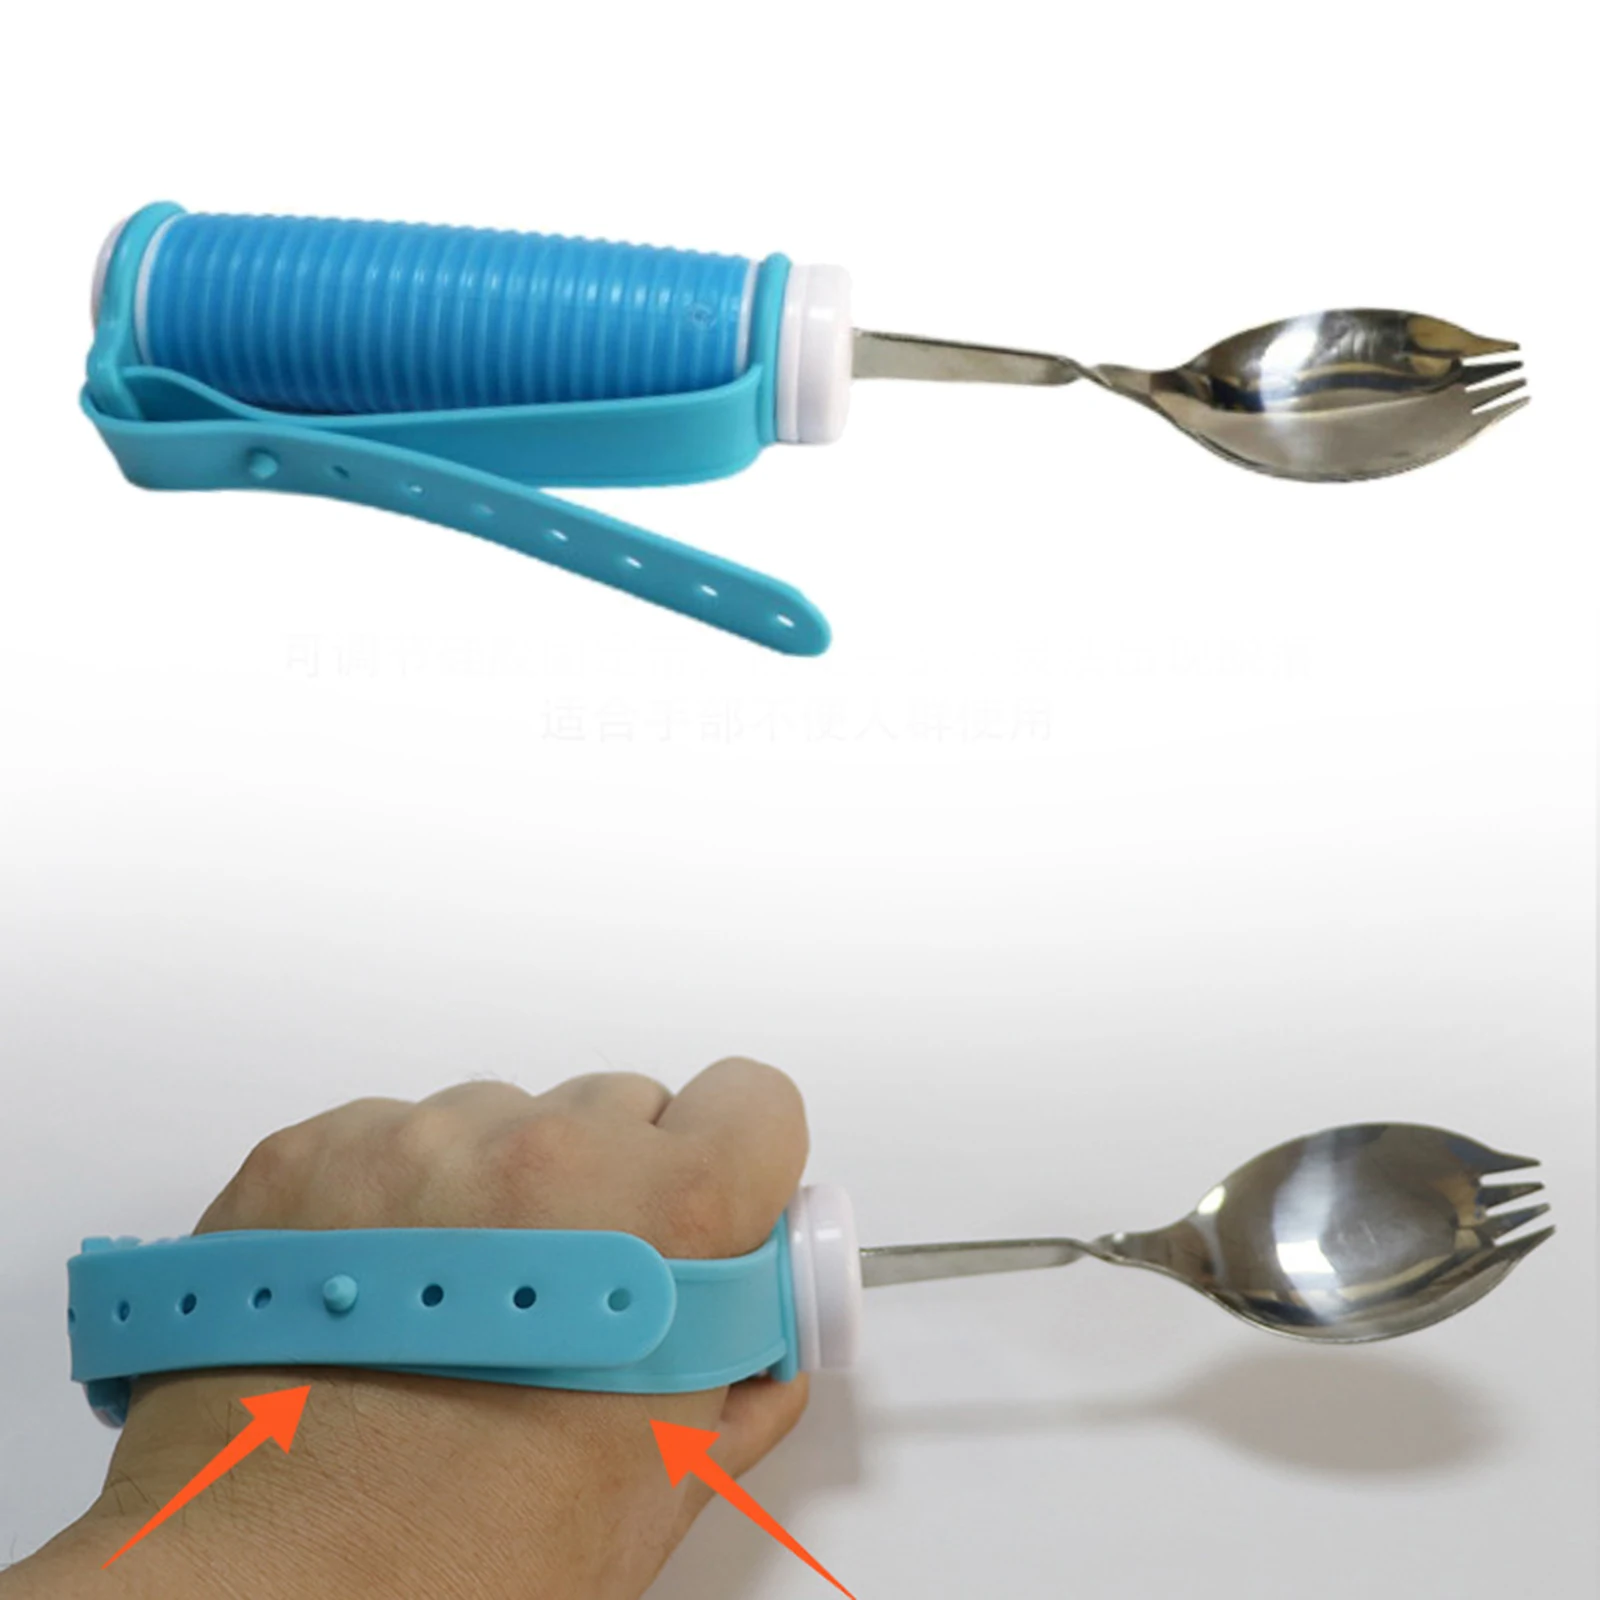 https://ae01.alicdn.com/kf/Hde182416c4c14b4c987b0dcd15f76d70f/Easy-Grip-Spoon-Fork-Caring-Utensils-Anti-Shake-360-Rotating-Spoon-Stainless-Steel-Eating-for-Tremors.jpg